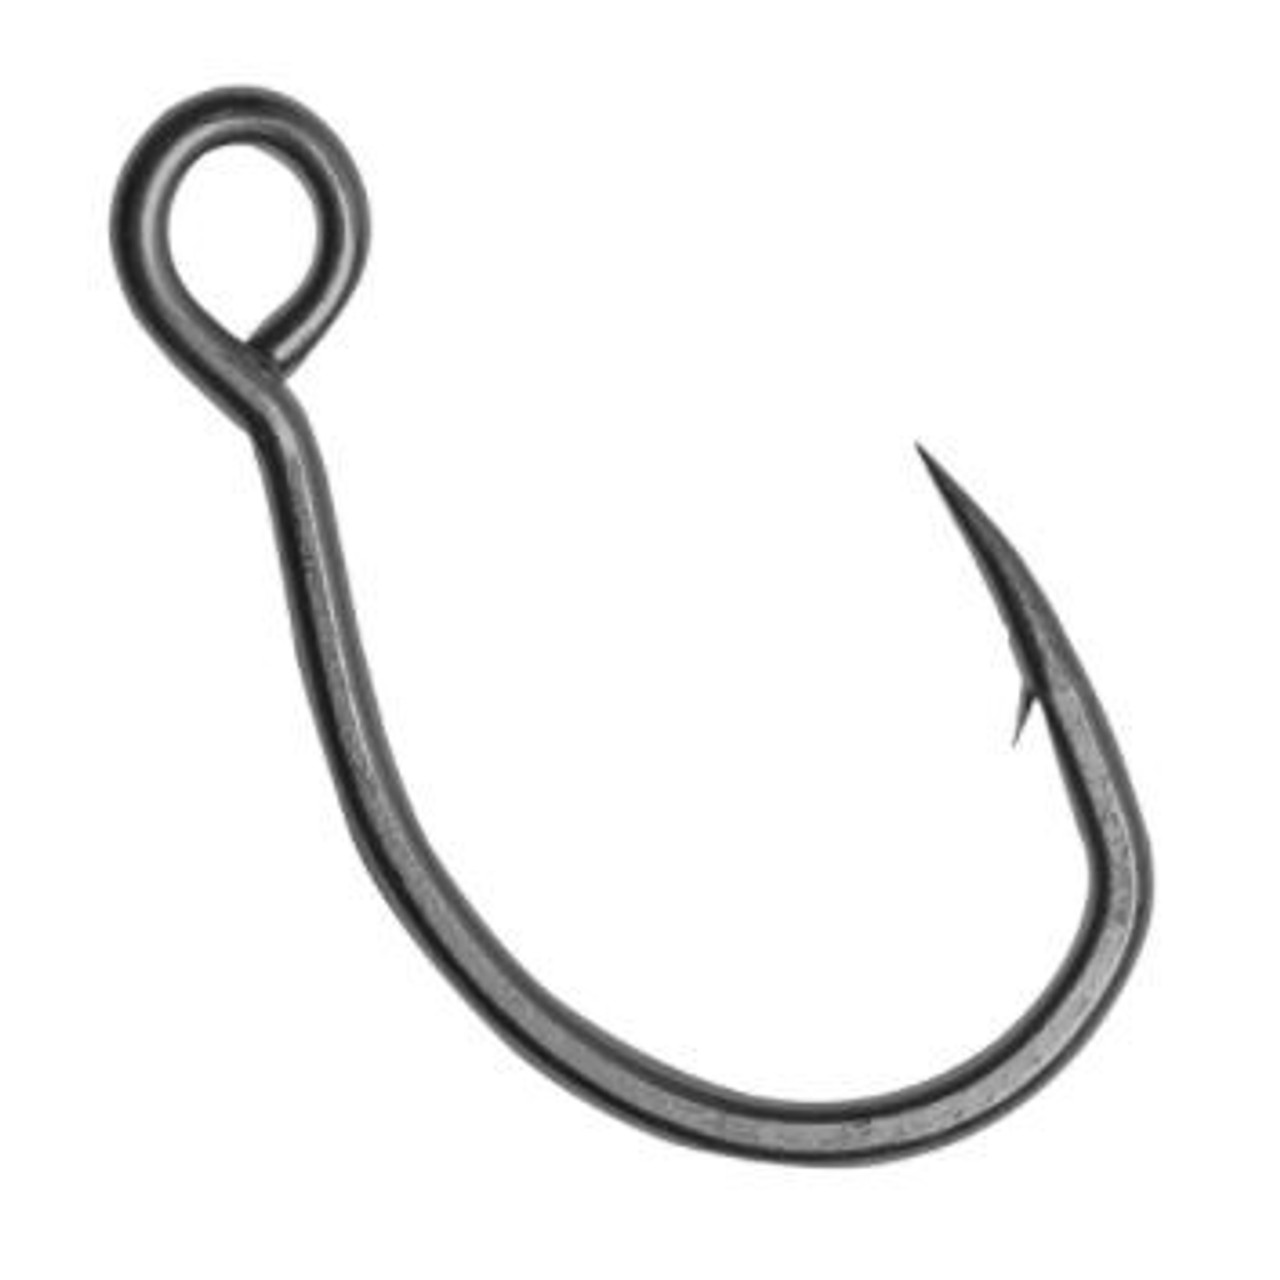 3X Replacement Hook Size 4/0 - Grey - Ramsey Outdoor